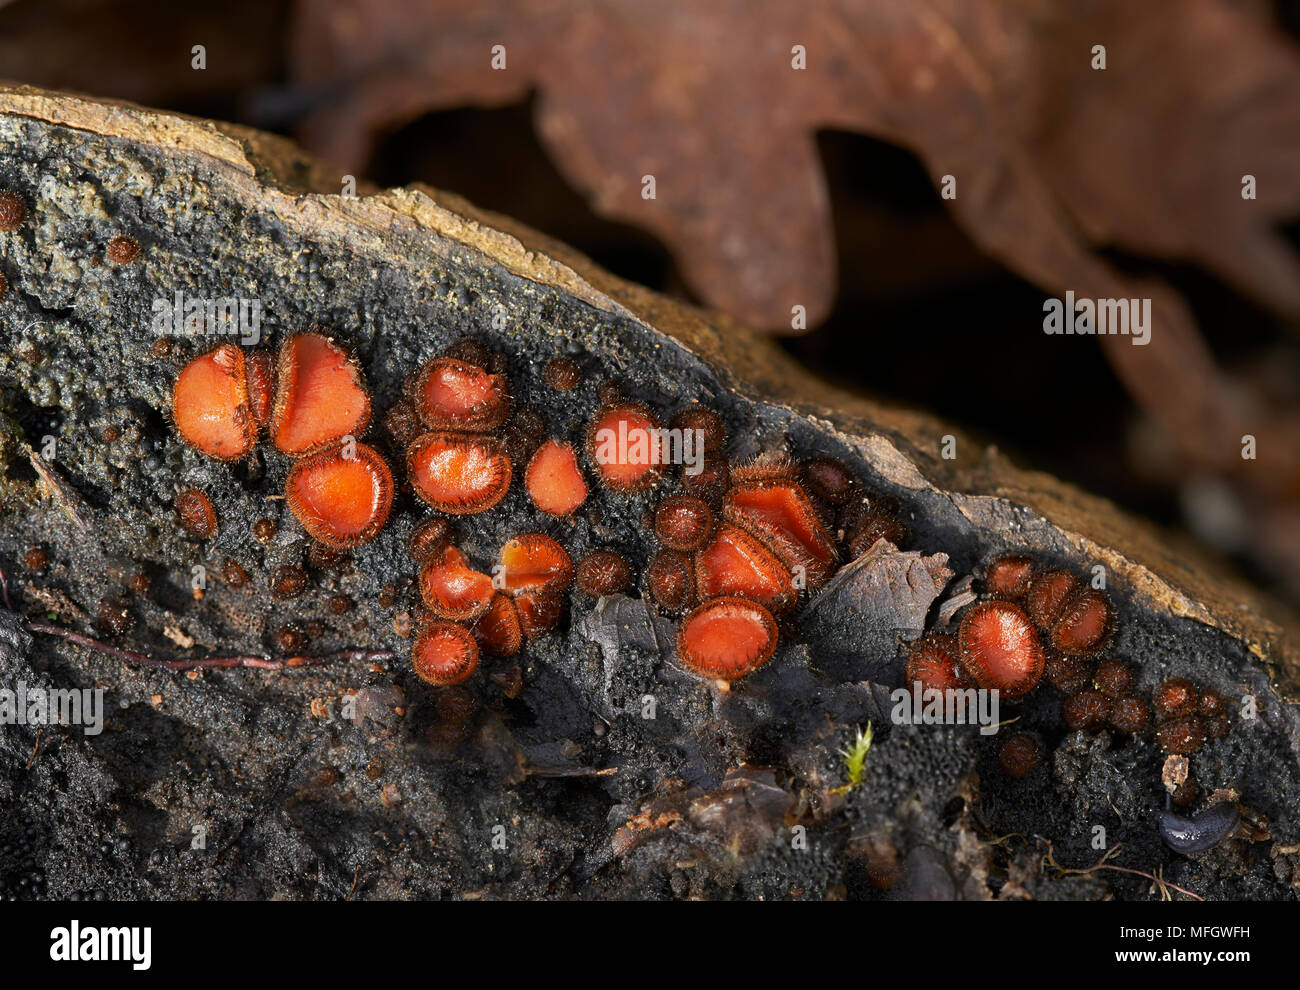 EYELASH FUNGUS (Scutellinia scutellata)   Sussex, Engalnd  Saprobic, on humous-rich damp soil, damp long-dead wood Stock Photo